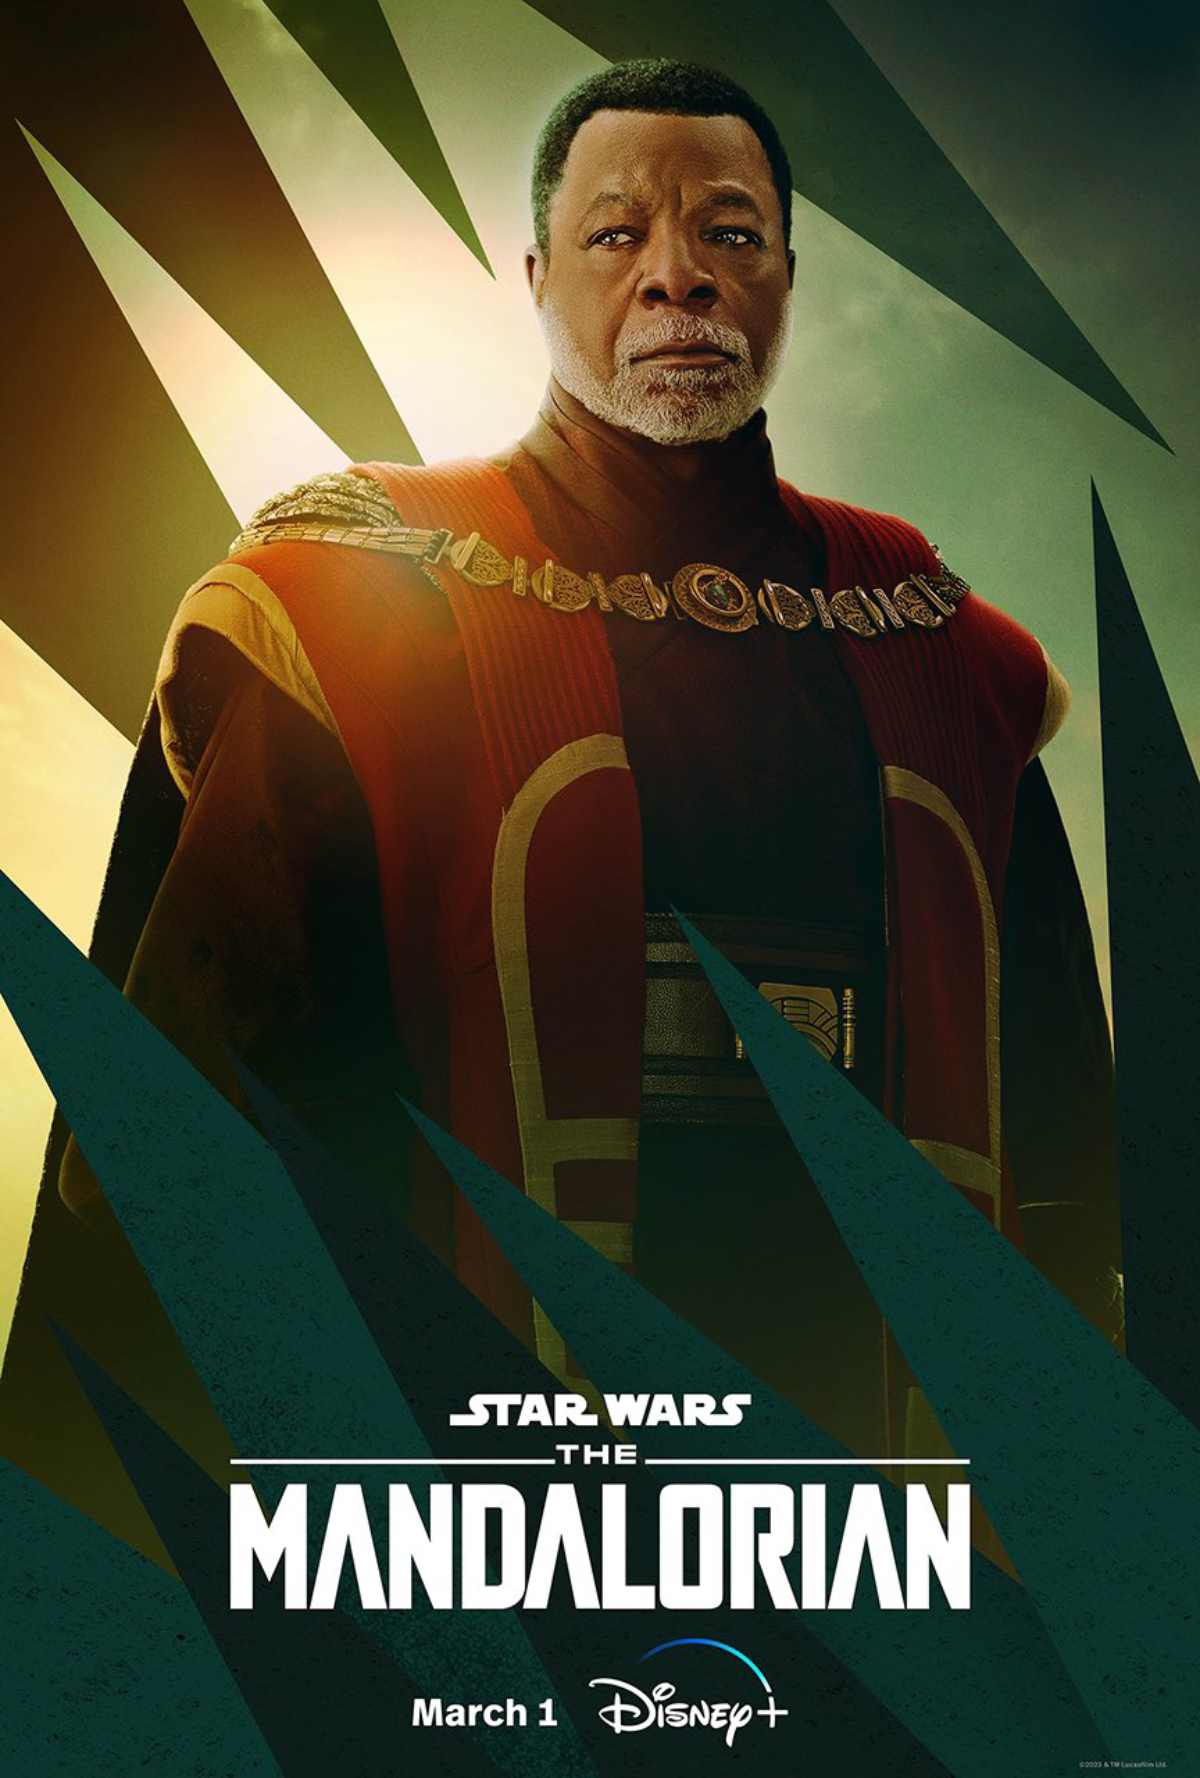 Mandalorian Character Posters Released for Season 3